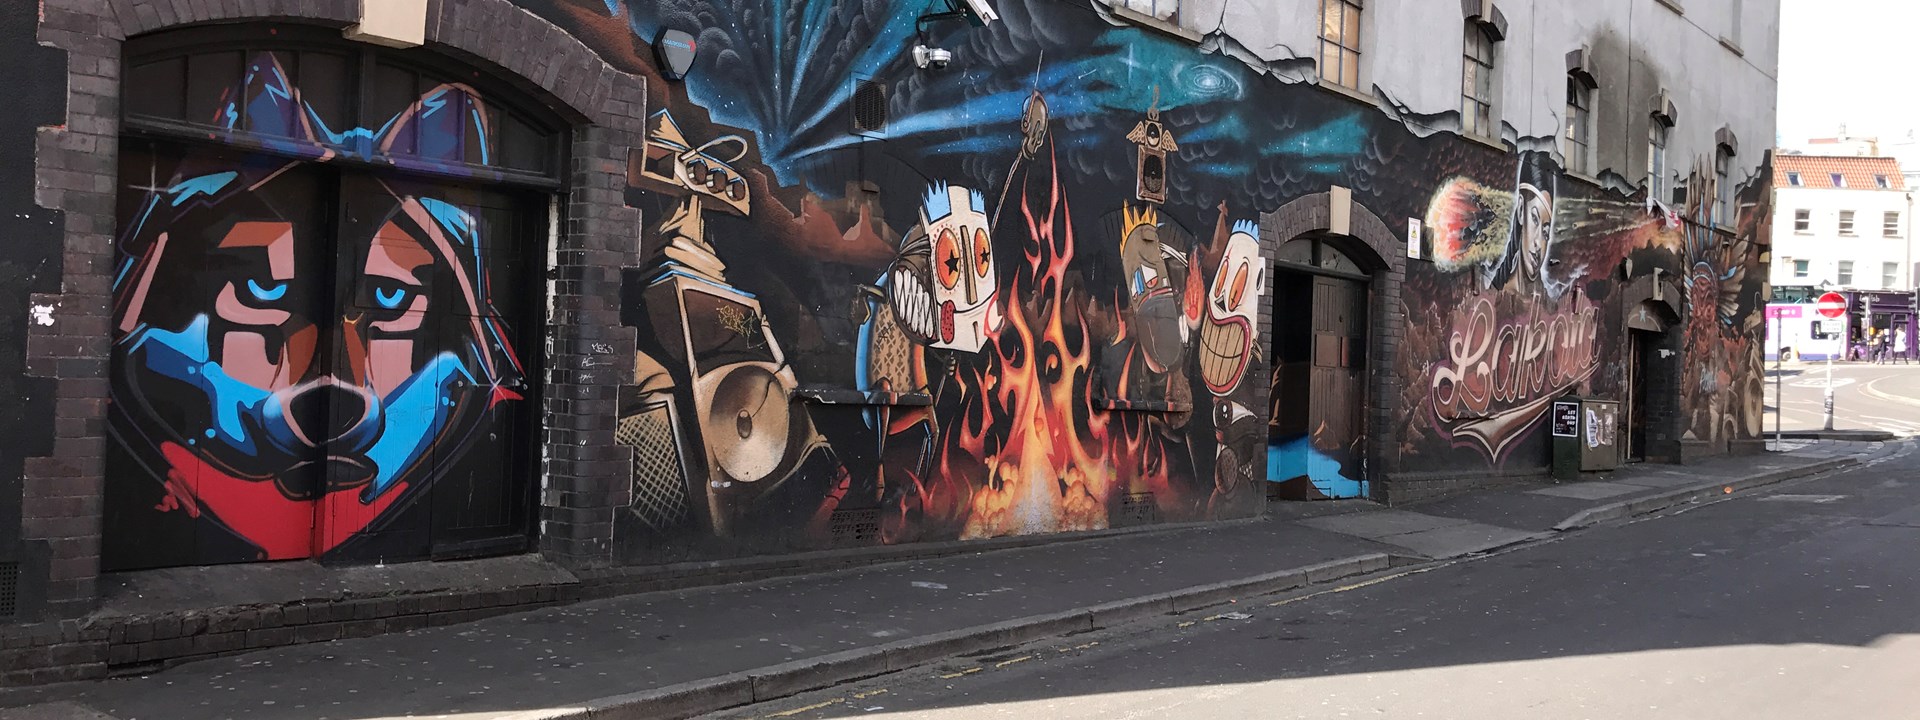 Street art tour bristol